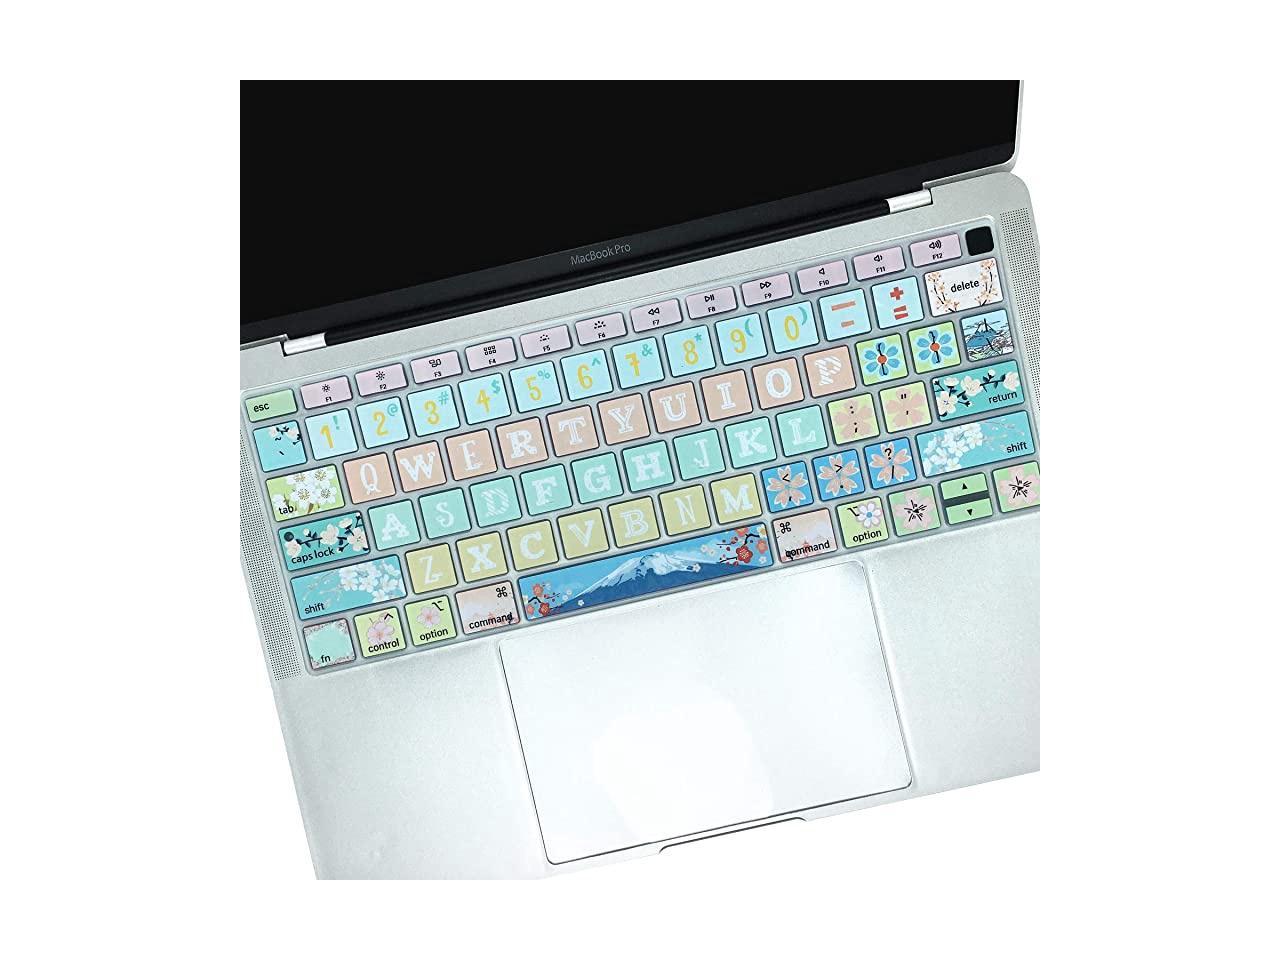 star wars mac air keyboard cover